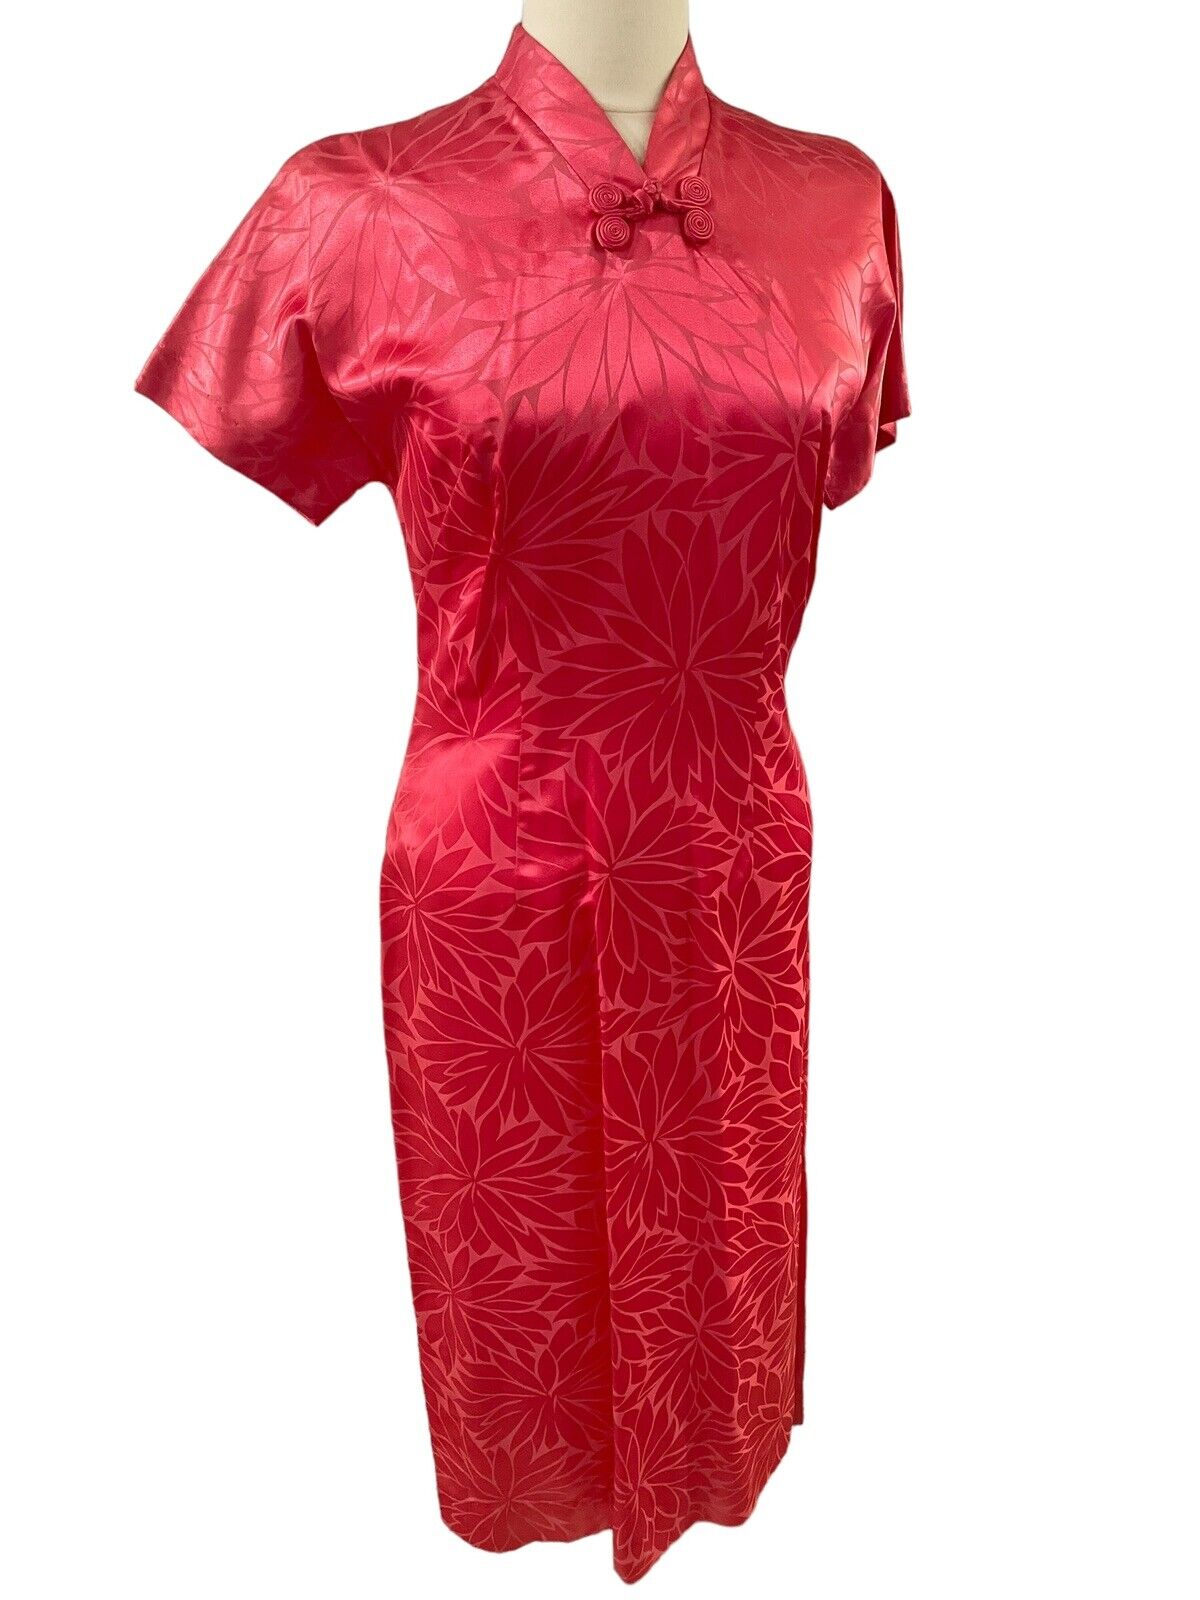 Alice Of California 60s Mod Vintage Hot Pink Floral Mandarin Collar Small